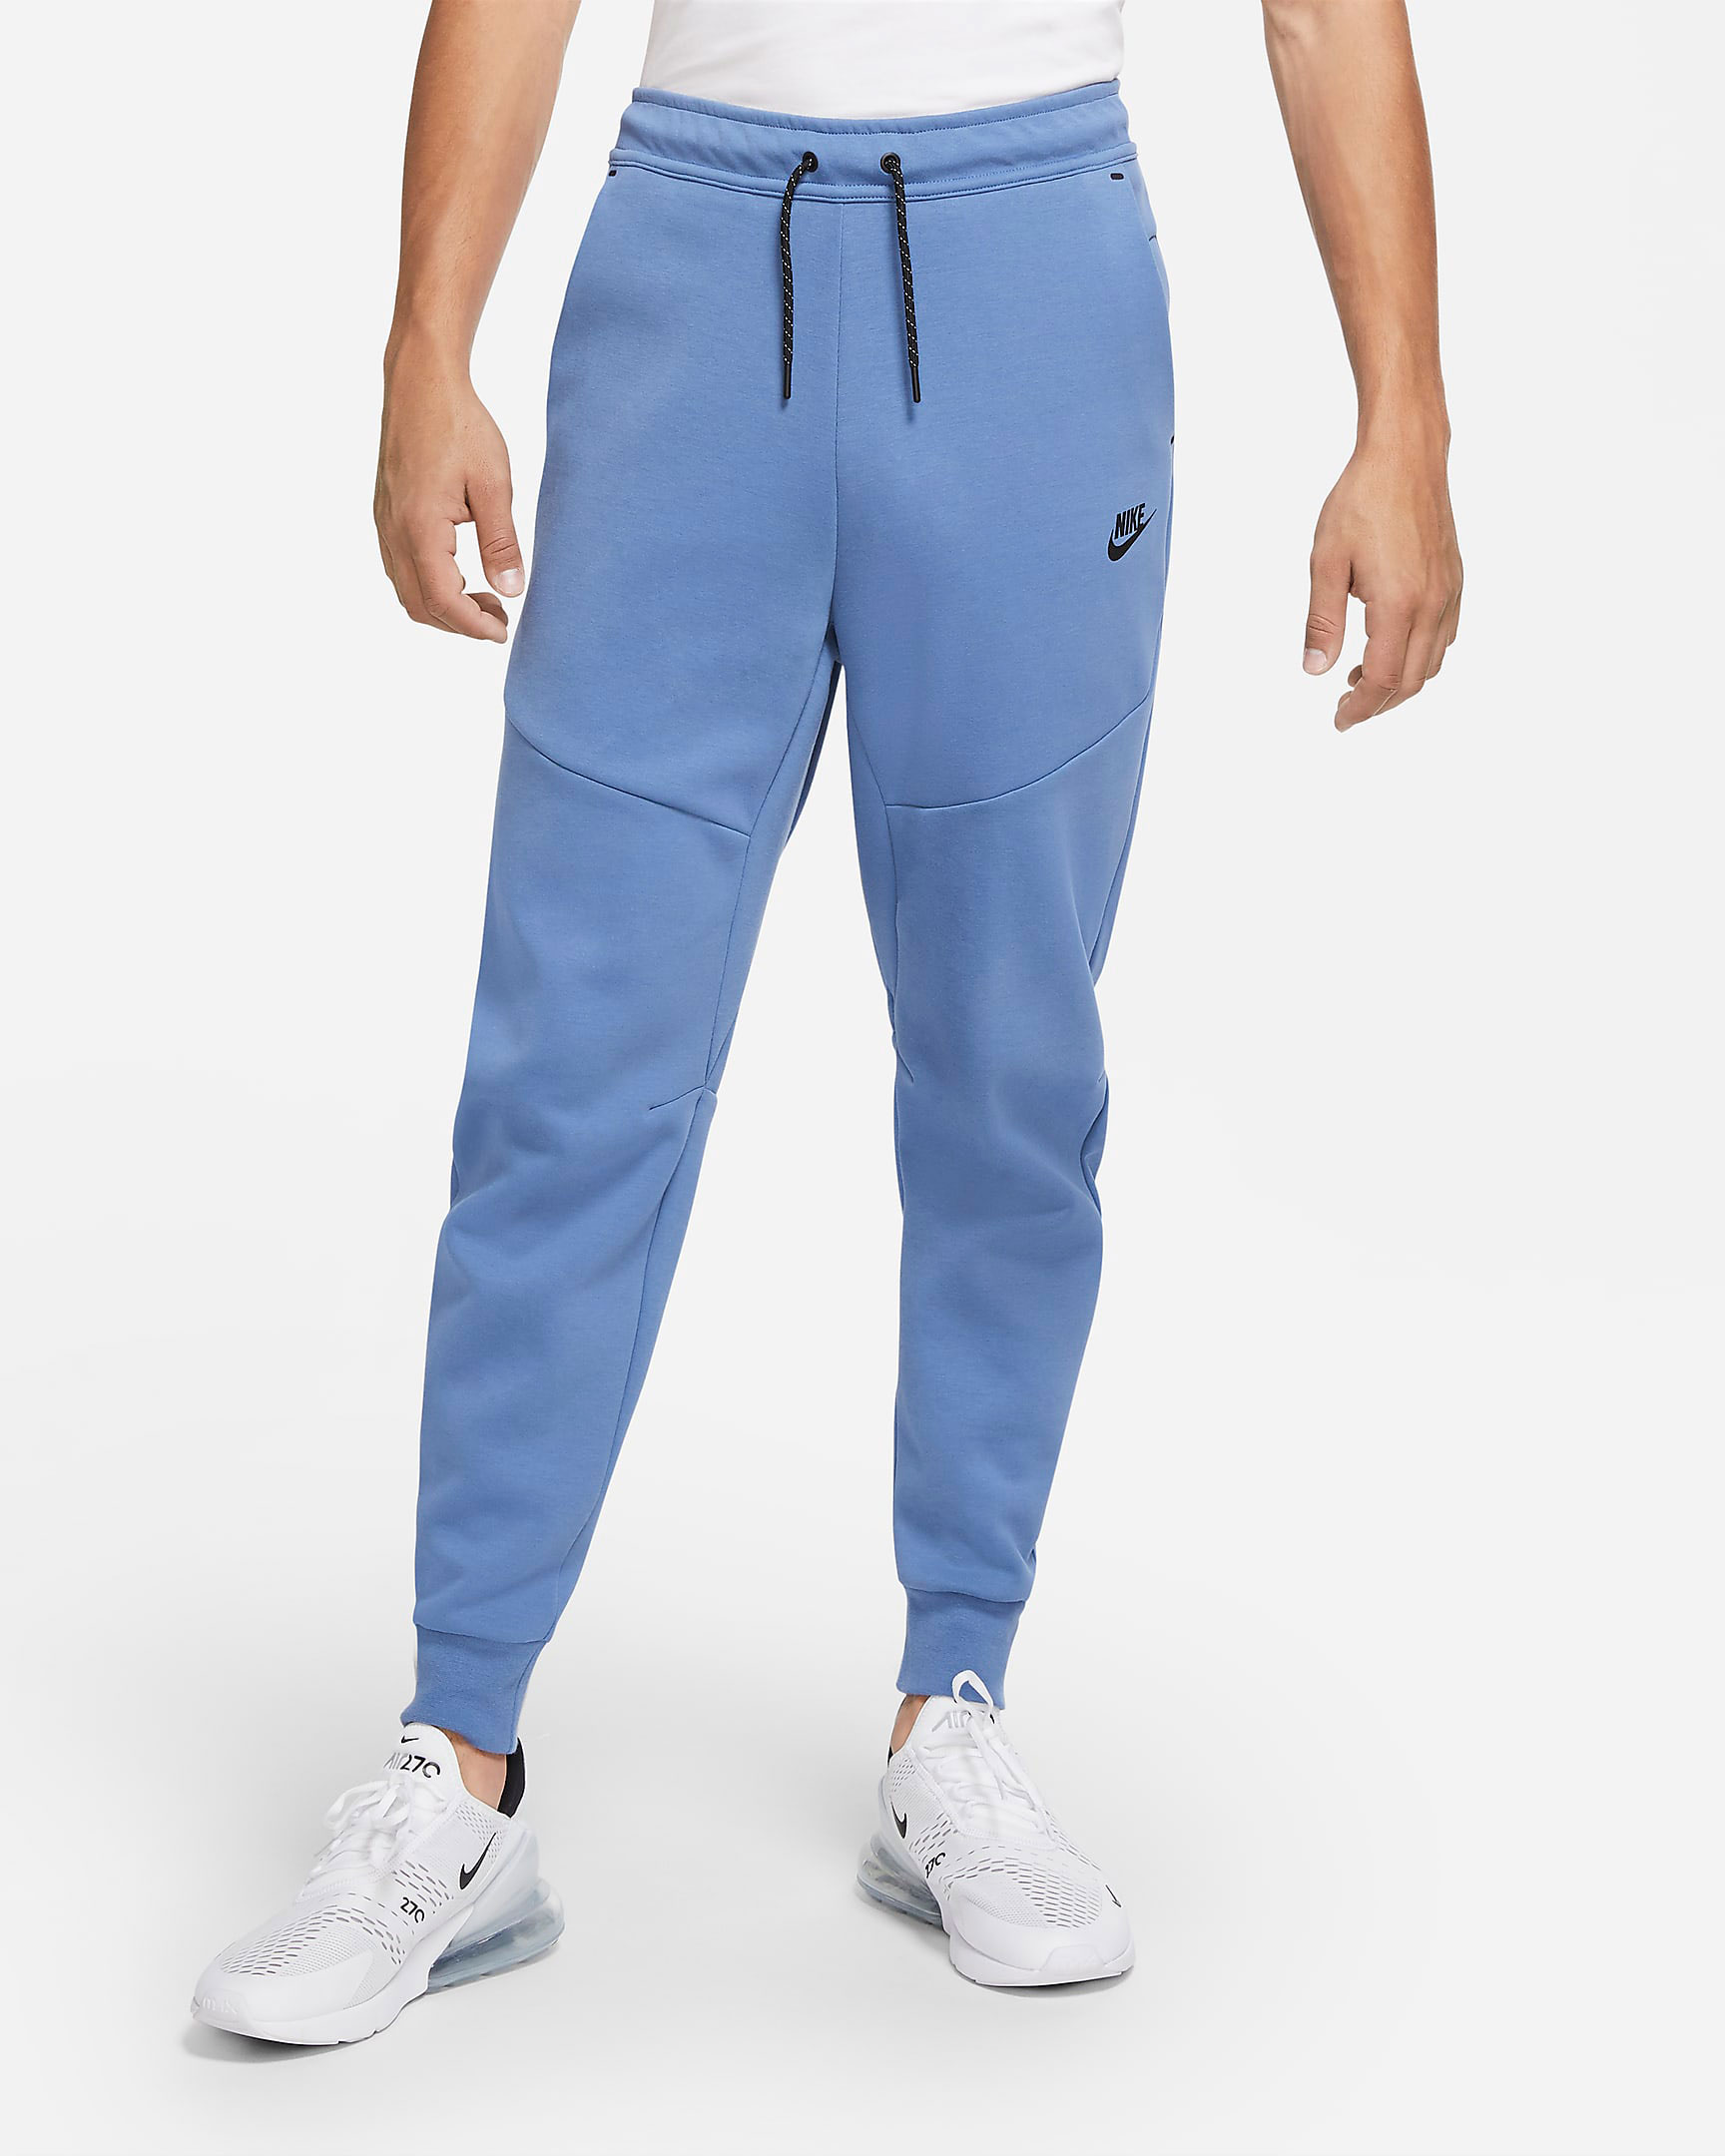 Nike Tech Fleece Jogger Pants for Fall 2020